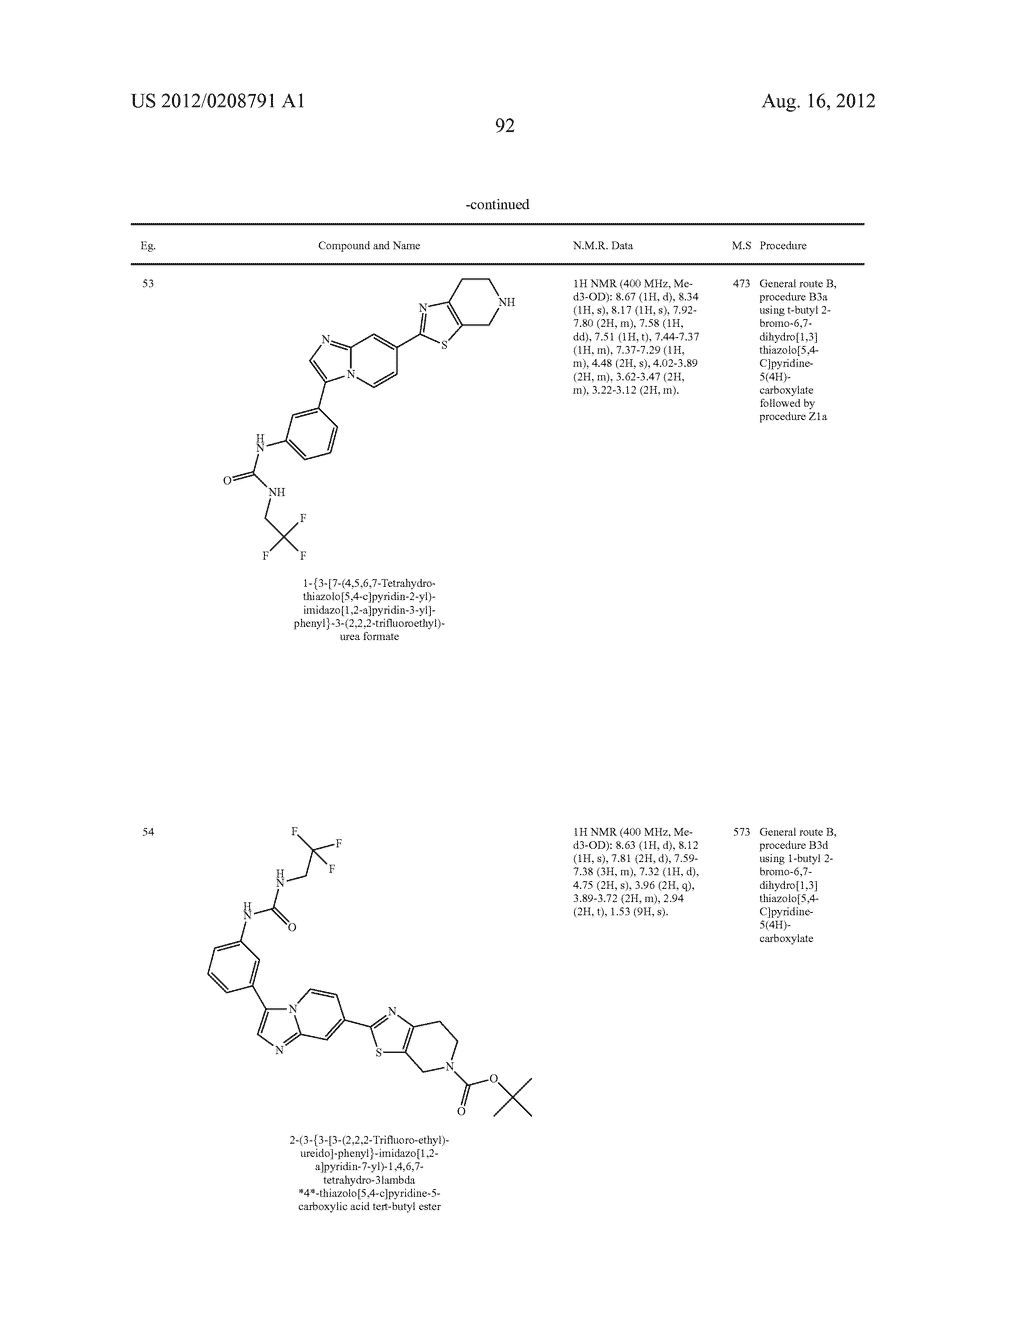 IMIDAZOPYRIDINE DERIVATIVES AS INHIBITORS OF RECEPTOR TYROSINE KINASES - diagram, schematic, and image 93